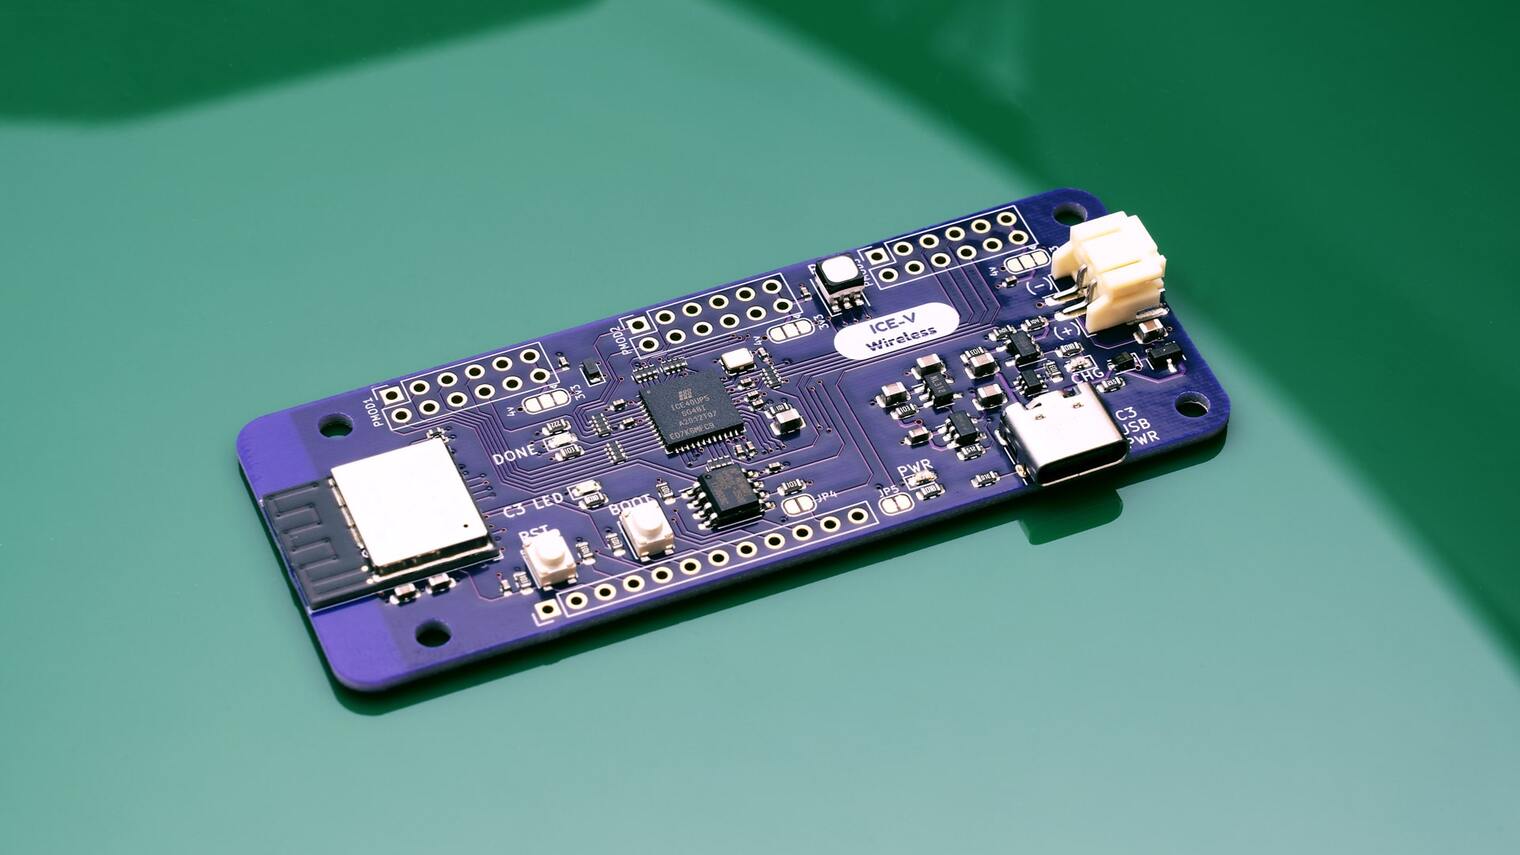 Qwerty Embedded Design crowdfunding ICE-V Wireless FPGA Development Board at $75.00